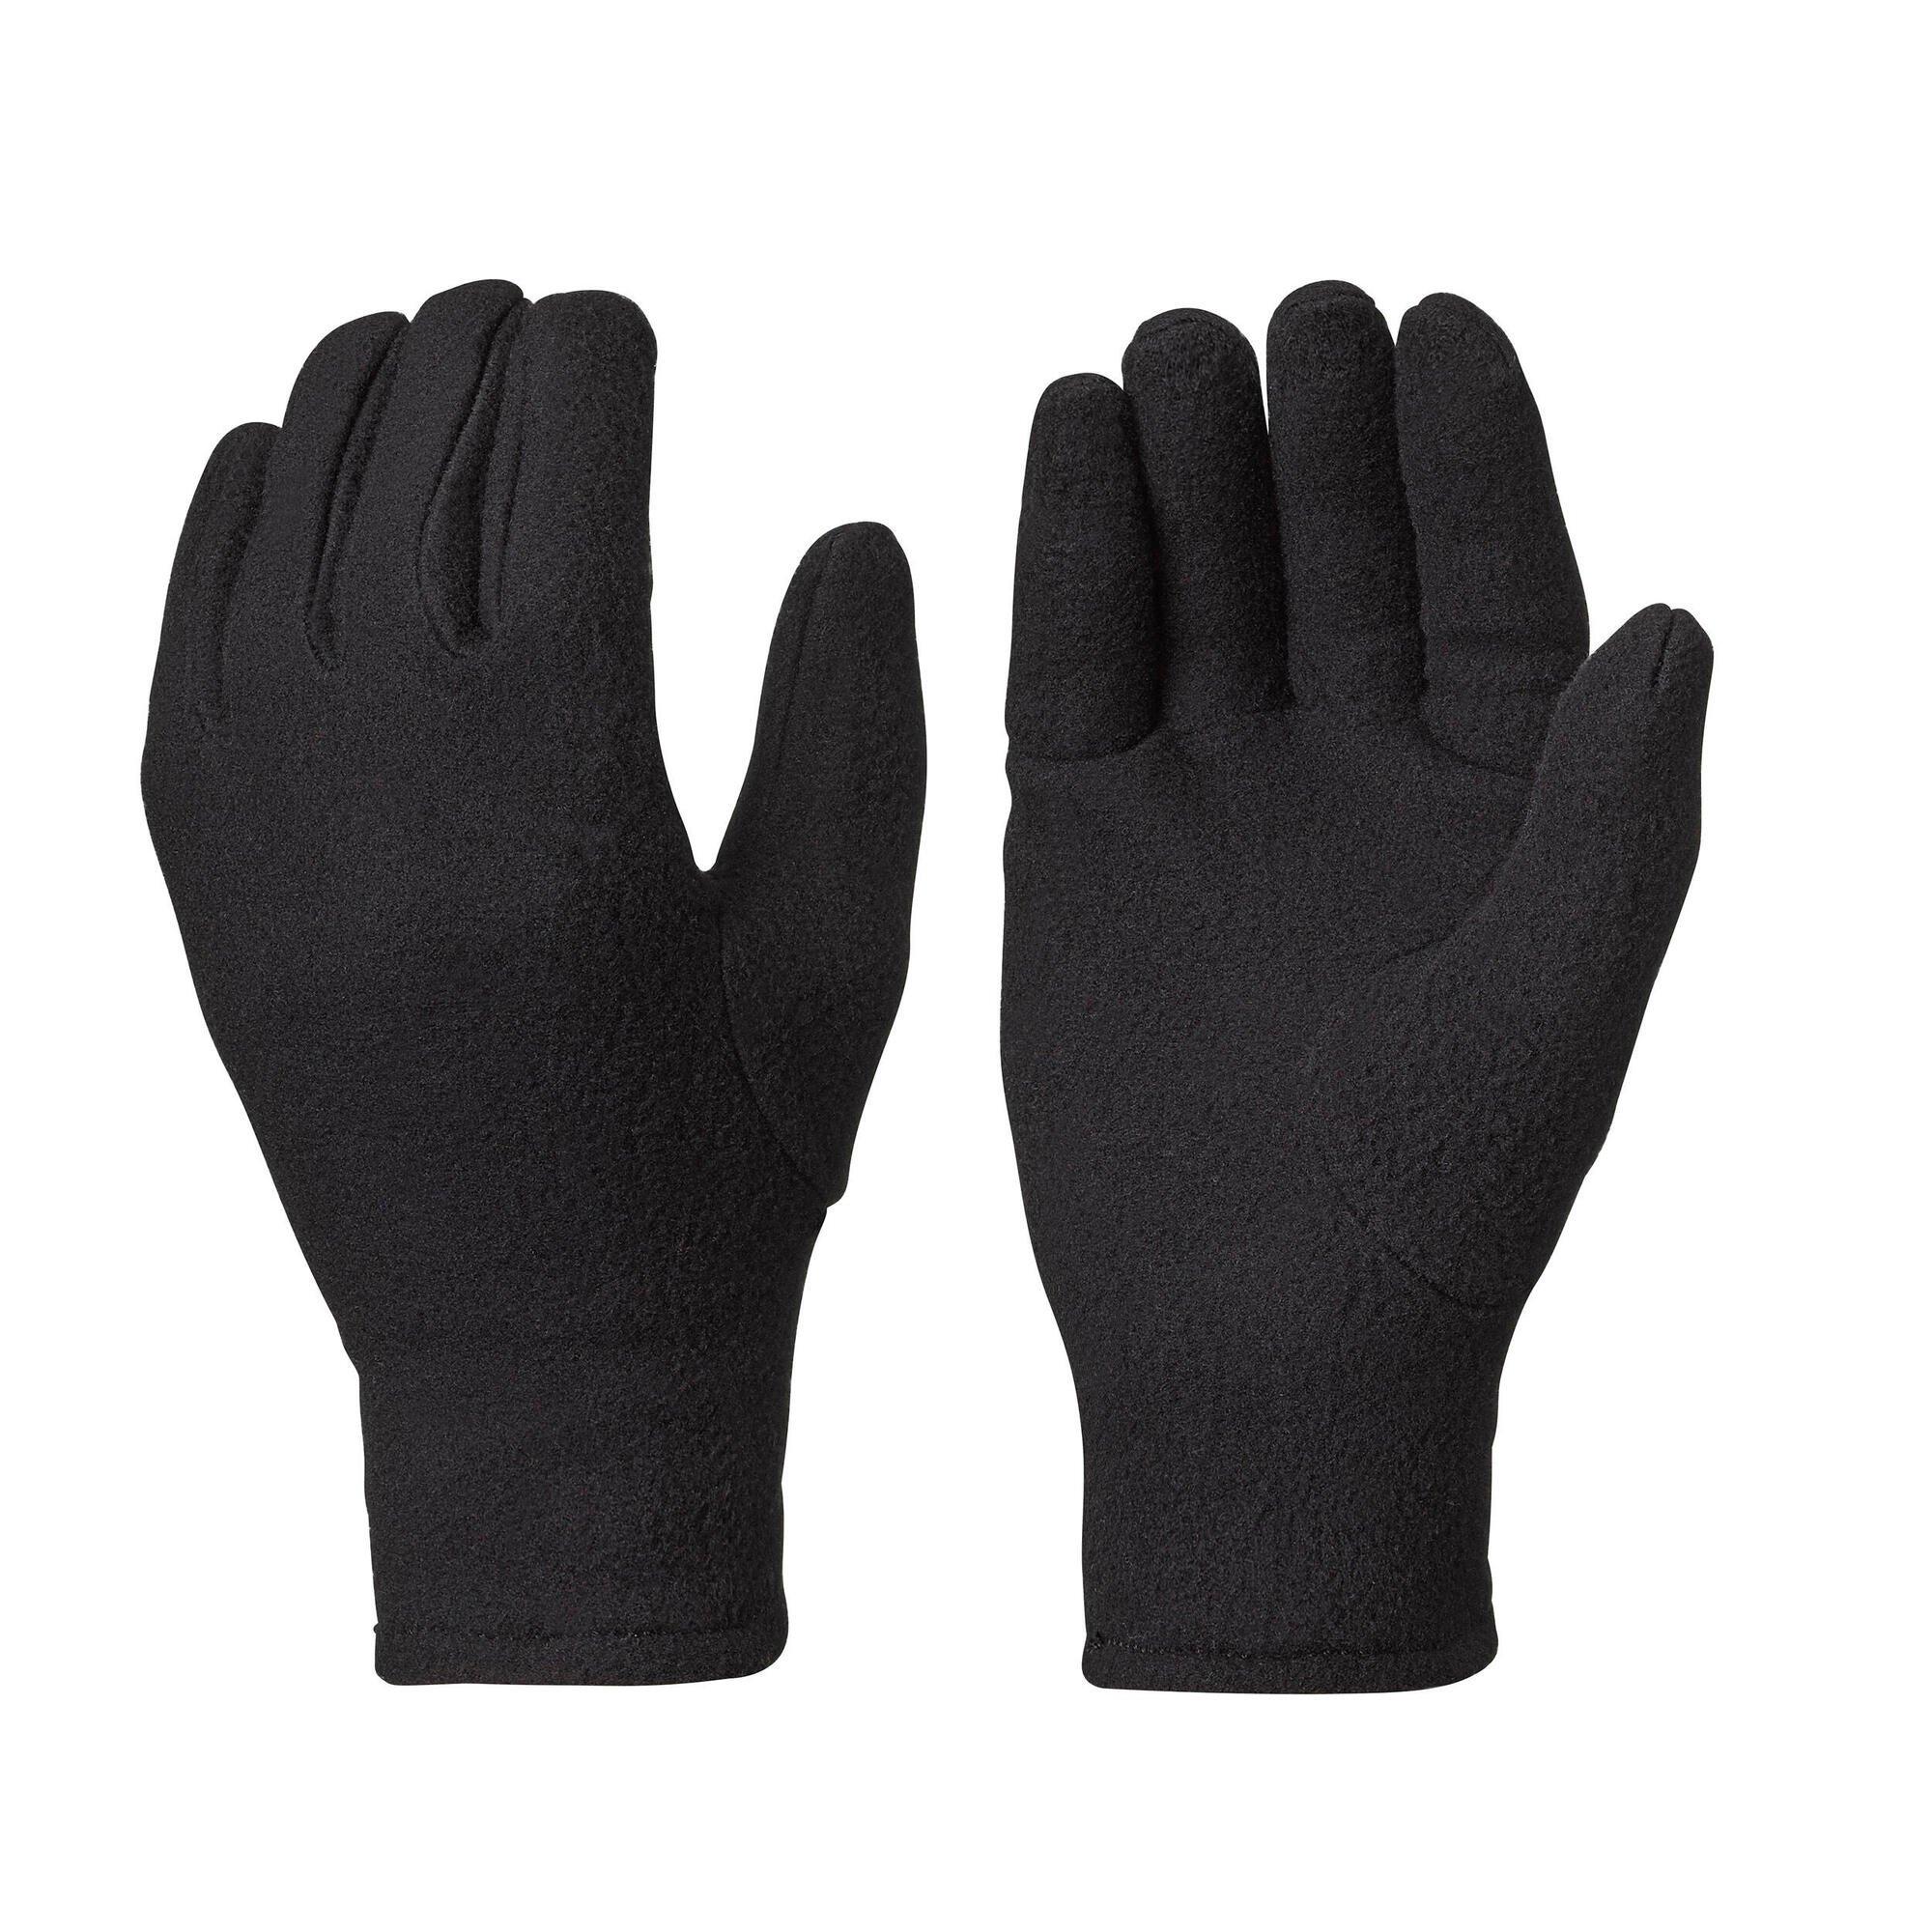 Fleece Hiking Gloves - Sh100 - 4-14 Years